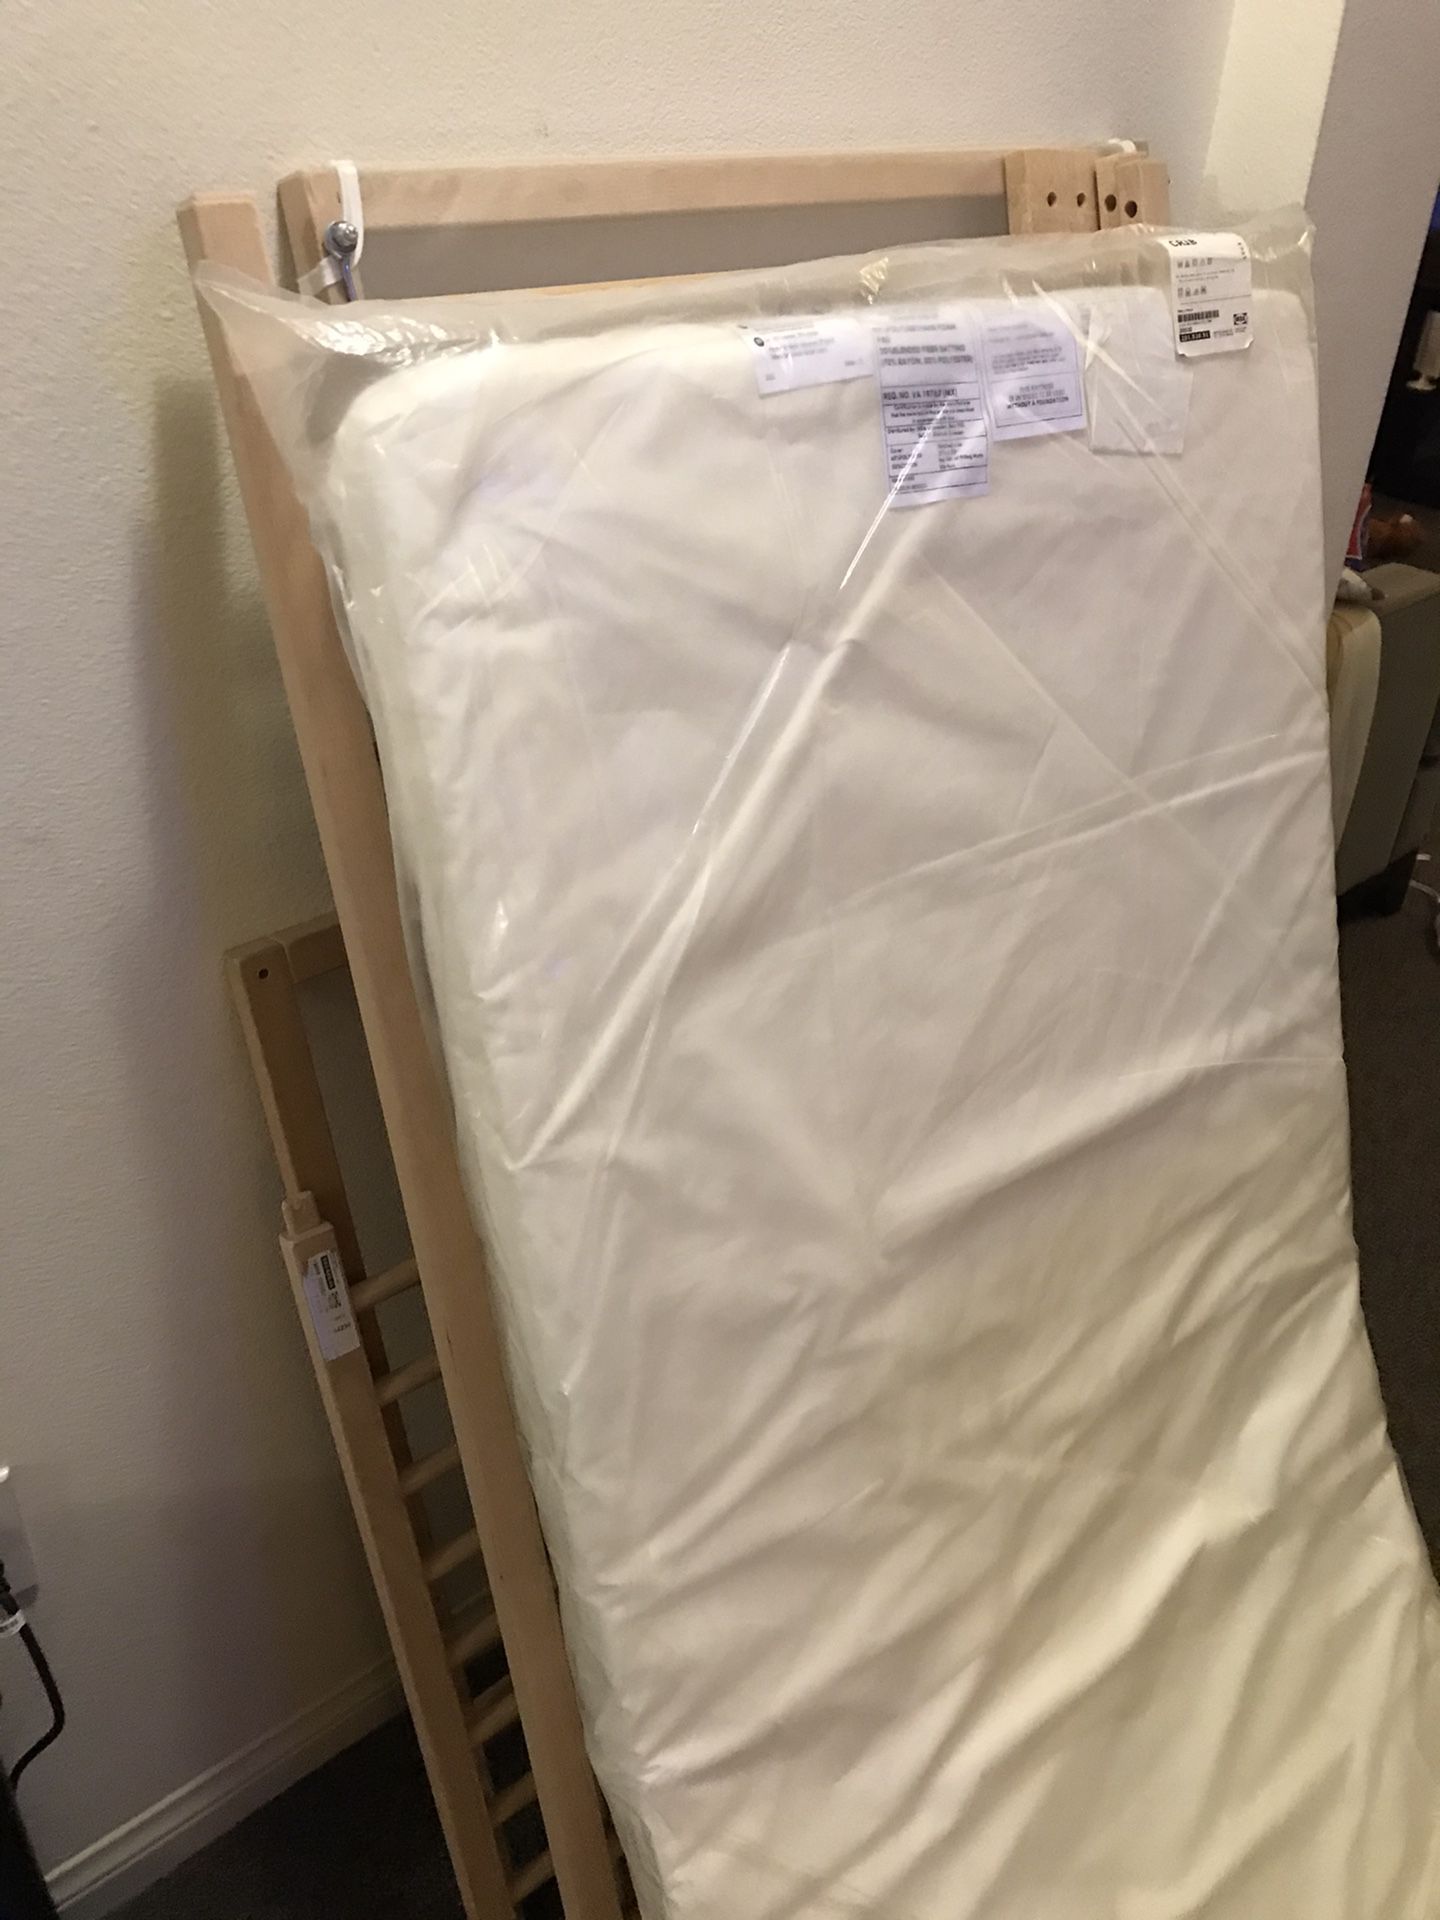 IKEA Baby Crib 27 1/2x52” with mattress!